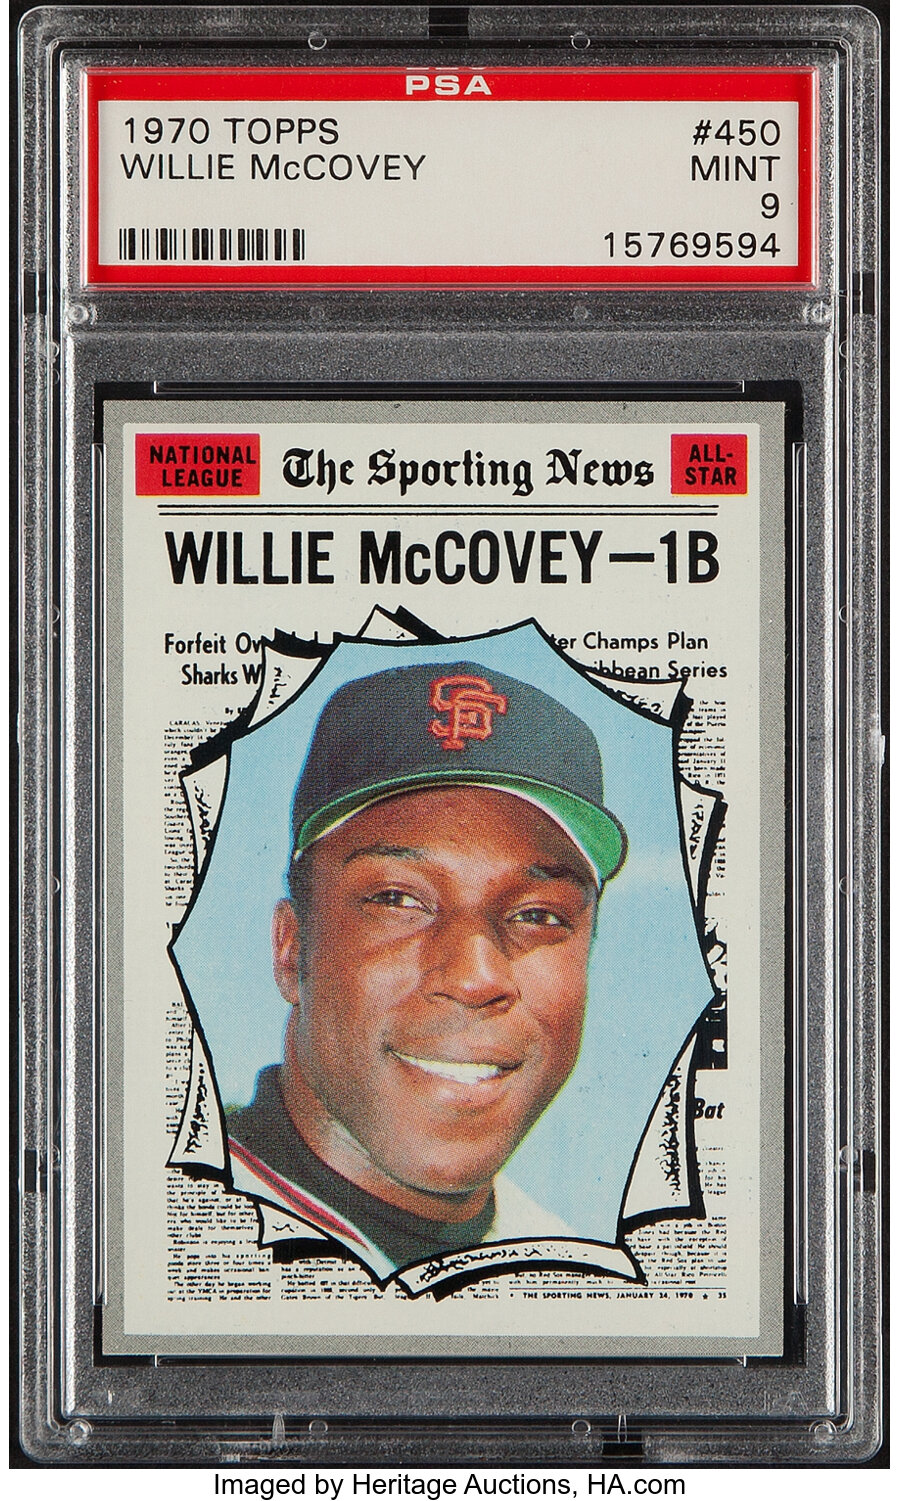 1970 Topps Willie McCovey All-Star #450 PSA Mint 9